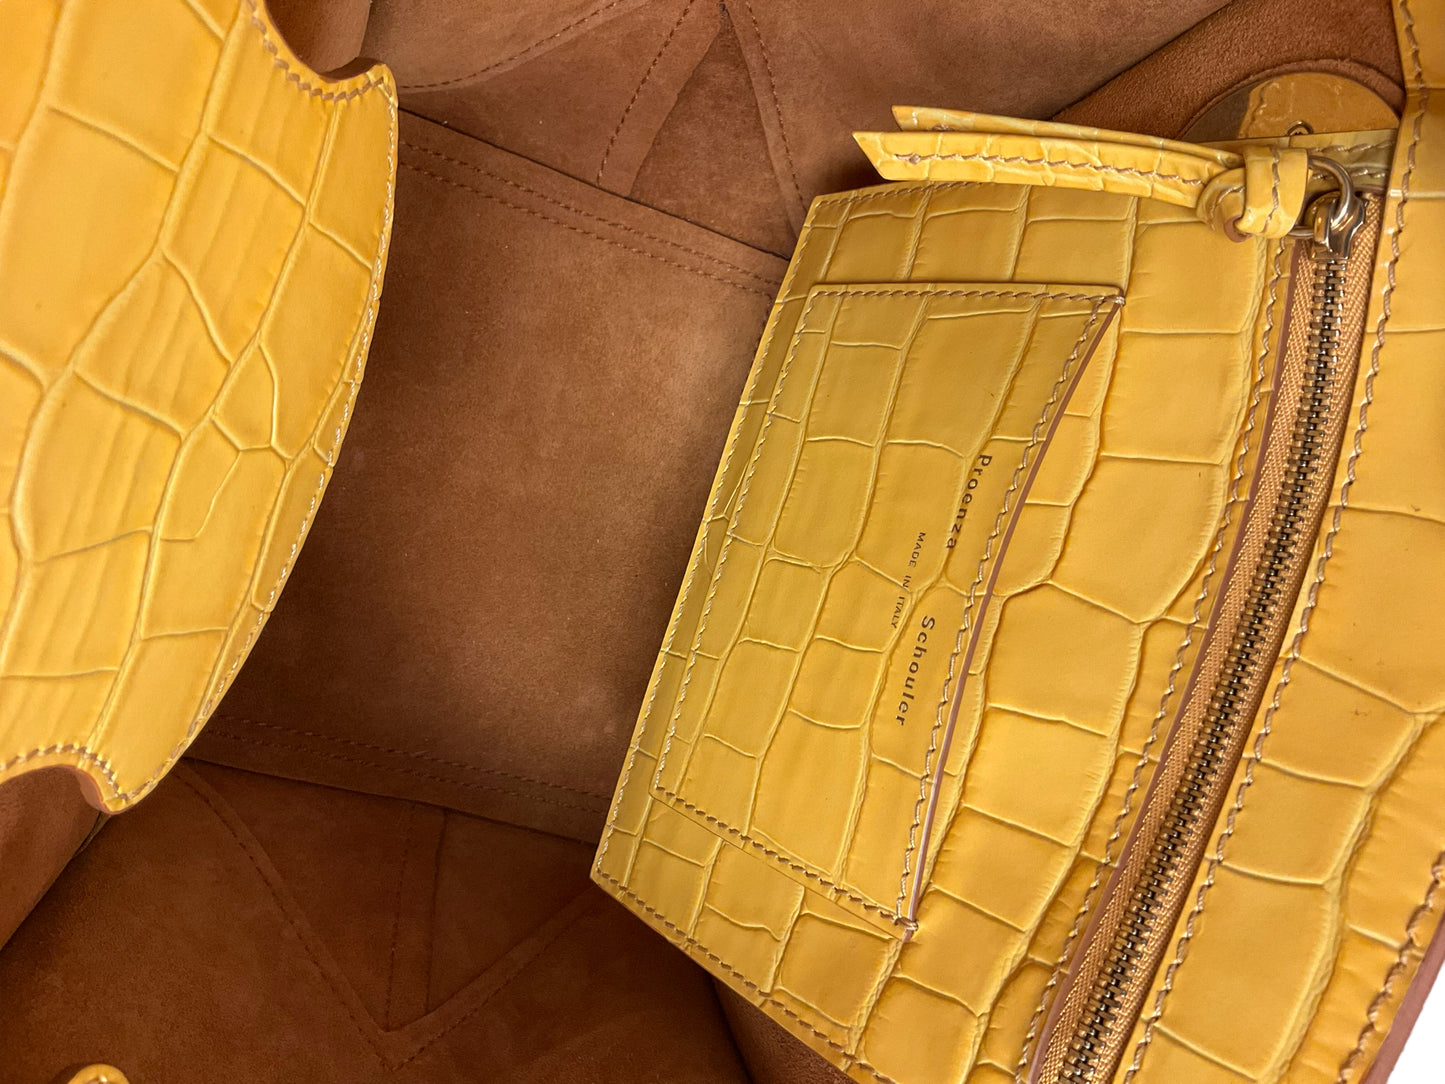 Handbag Luxury Designer By Proenza  Size: Medium